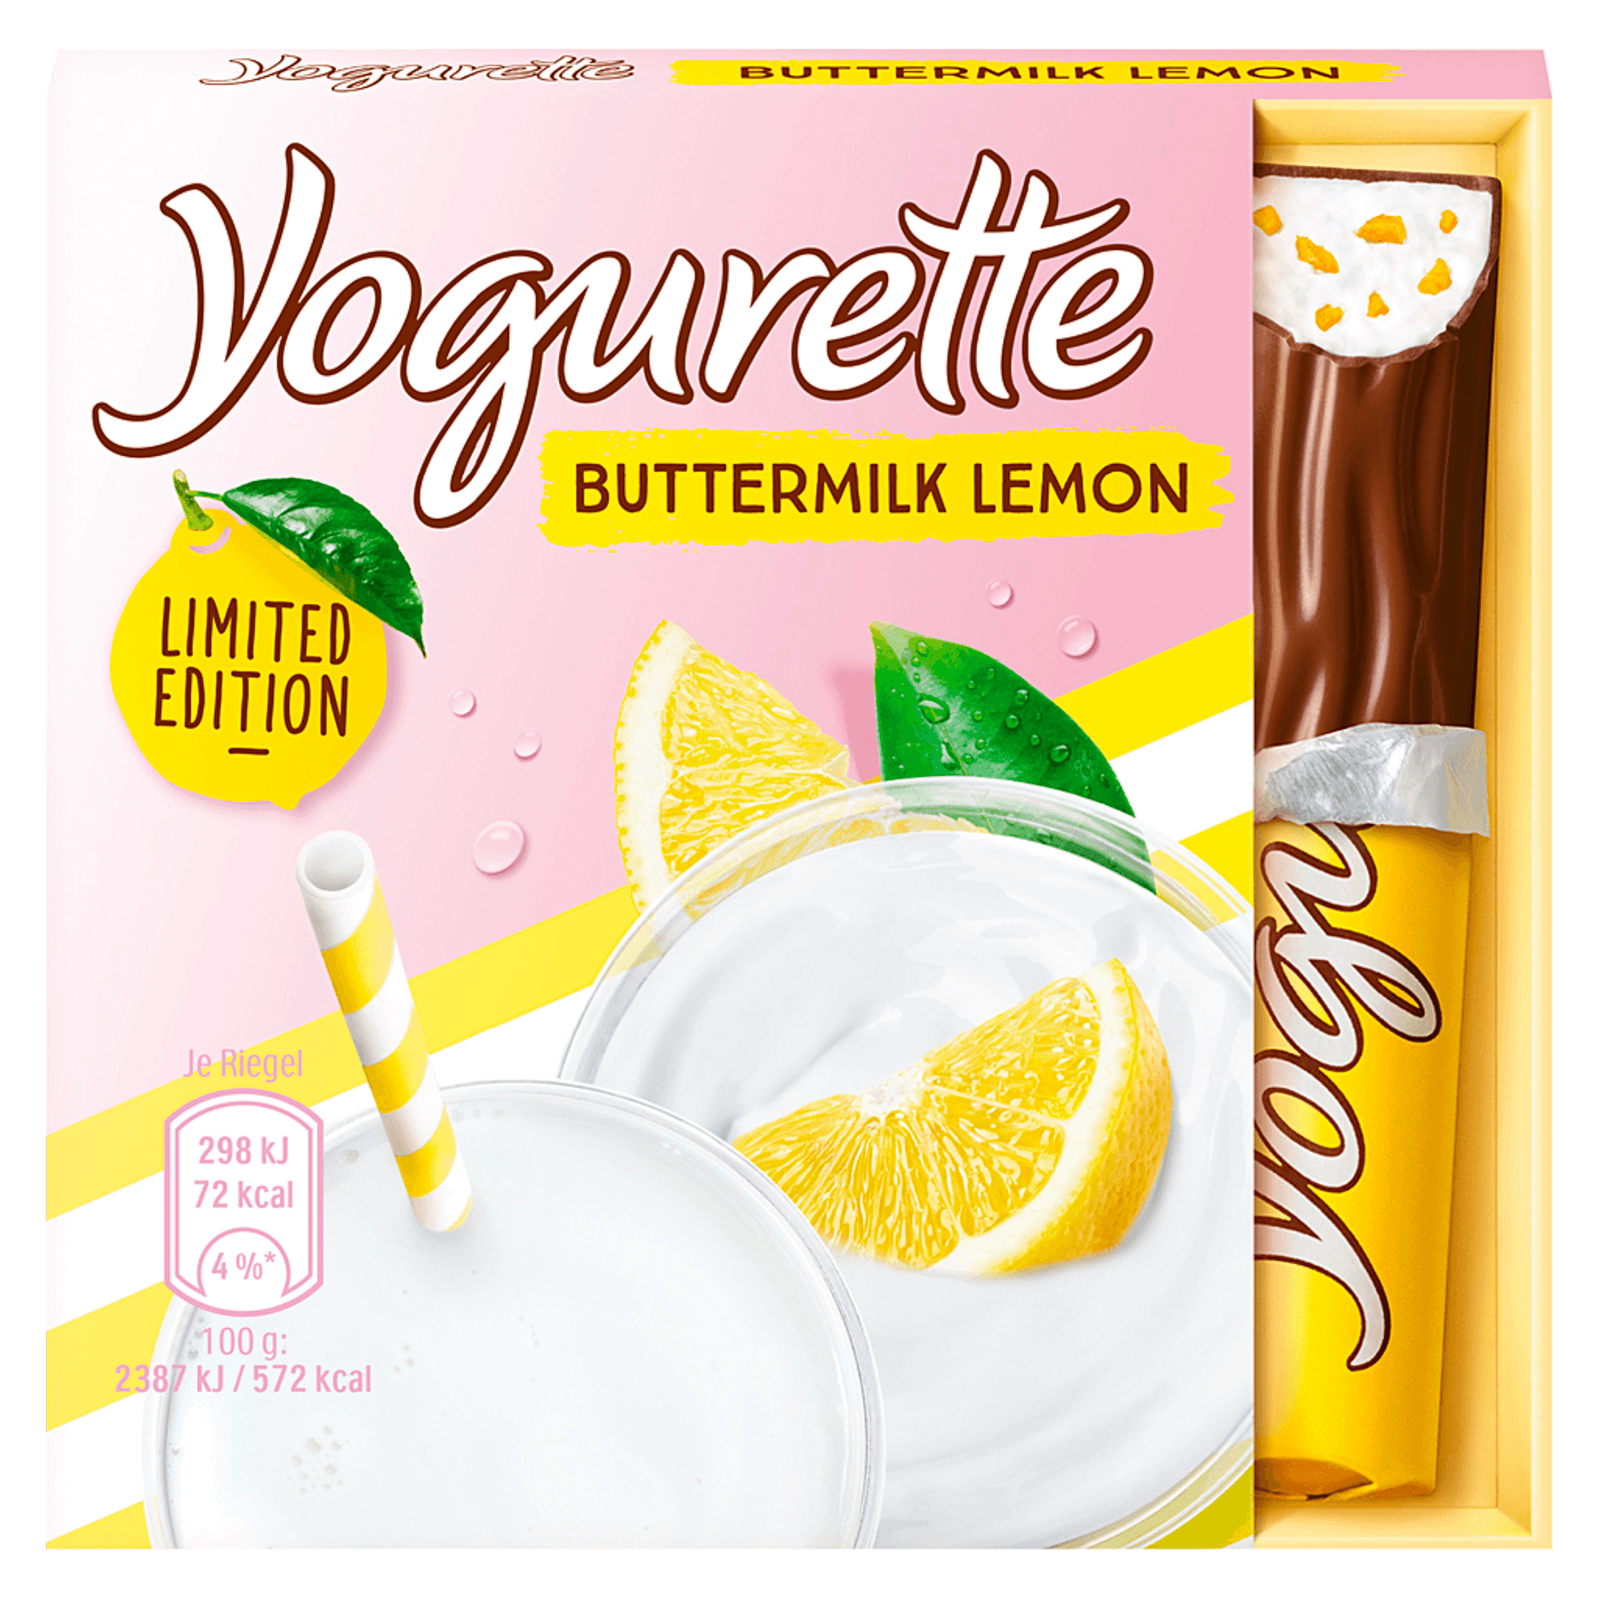 Yogurette Buttermilk Lemon 50g bei bestellen! REWE online